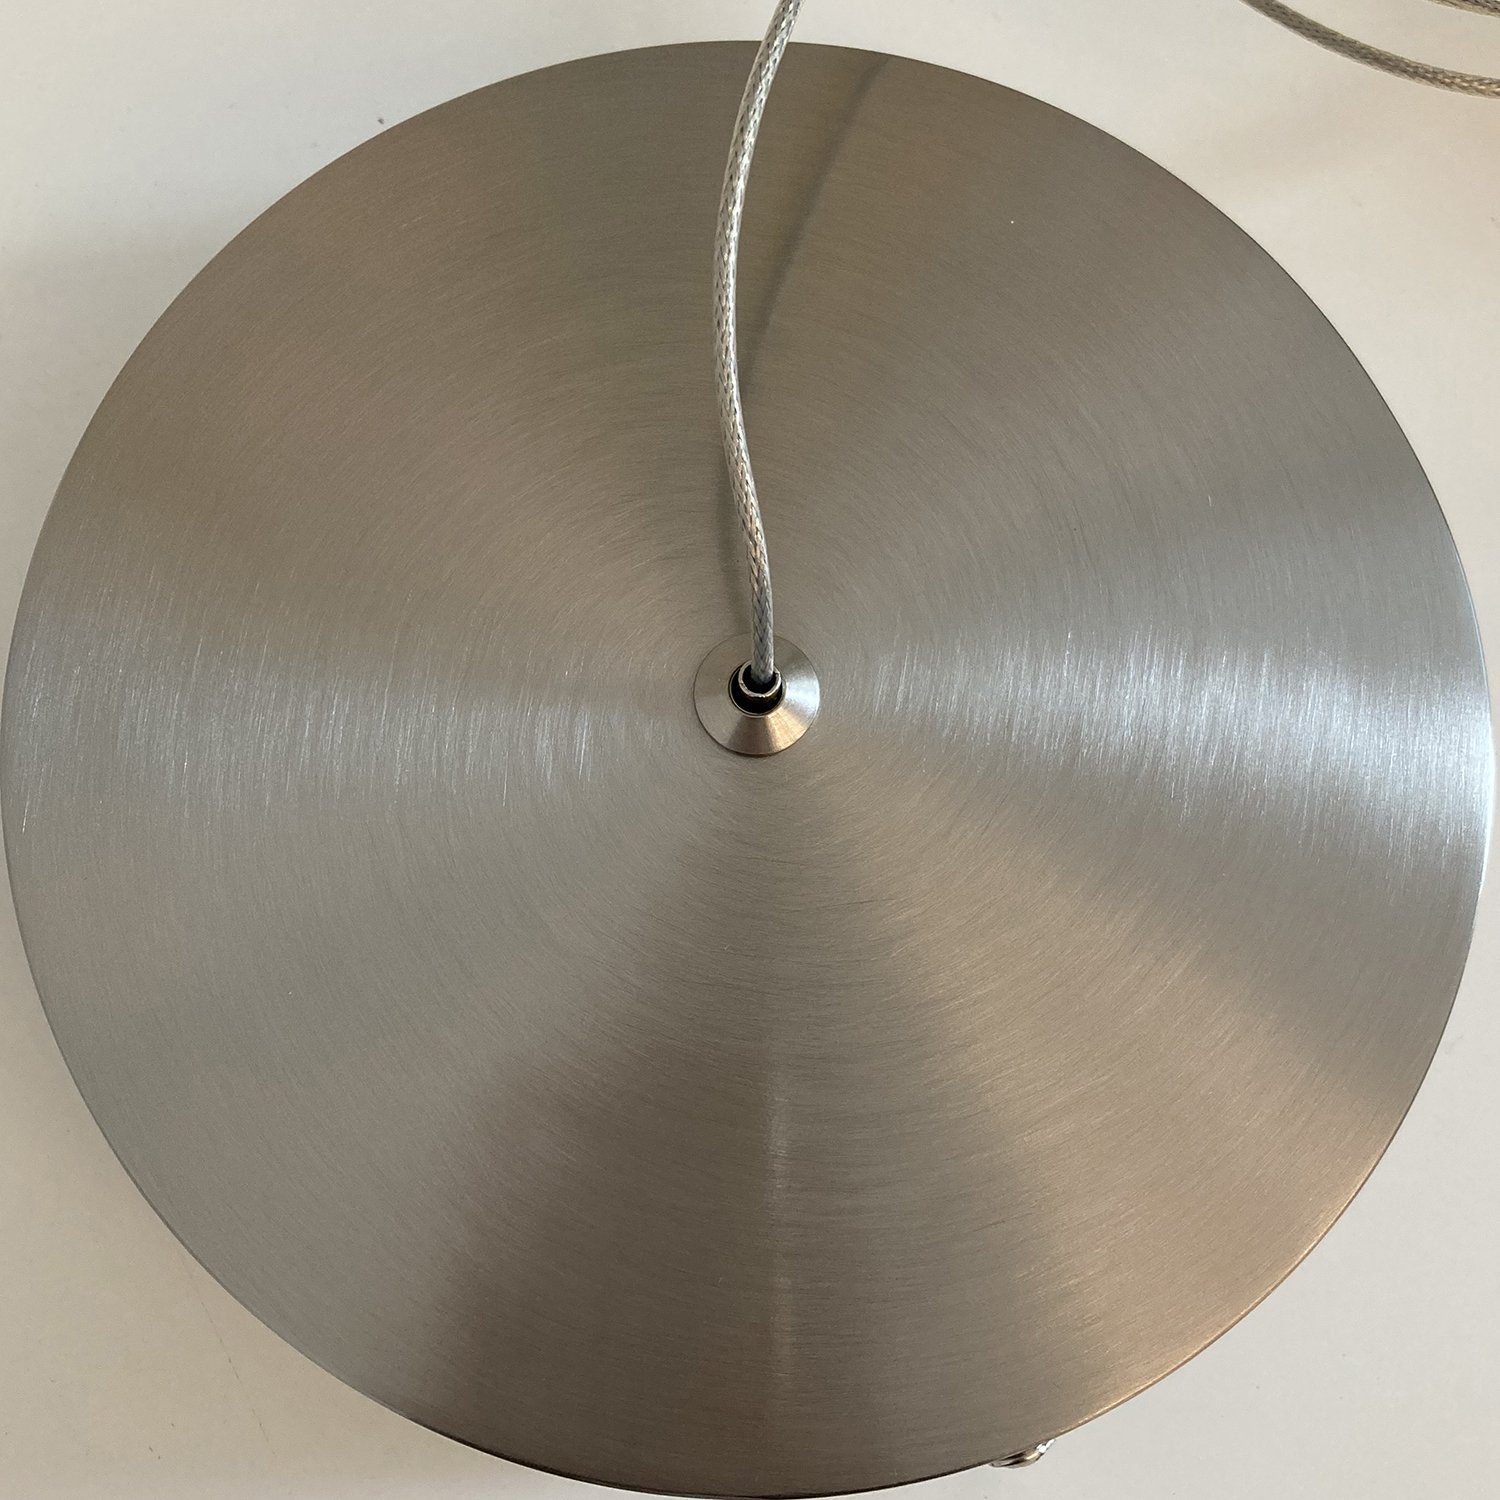 OSTROM Lampe plafond ronde nickel satiné Ø 350 cm